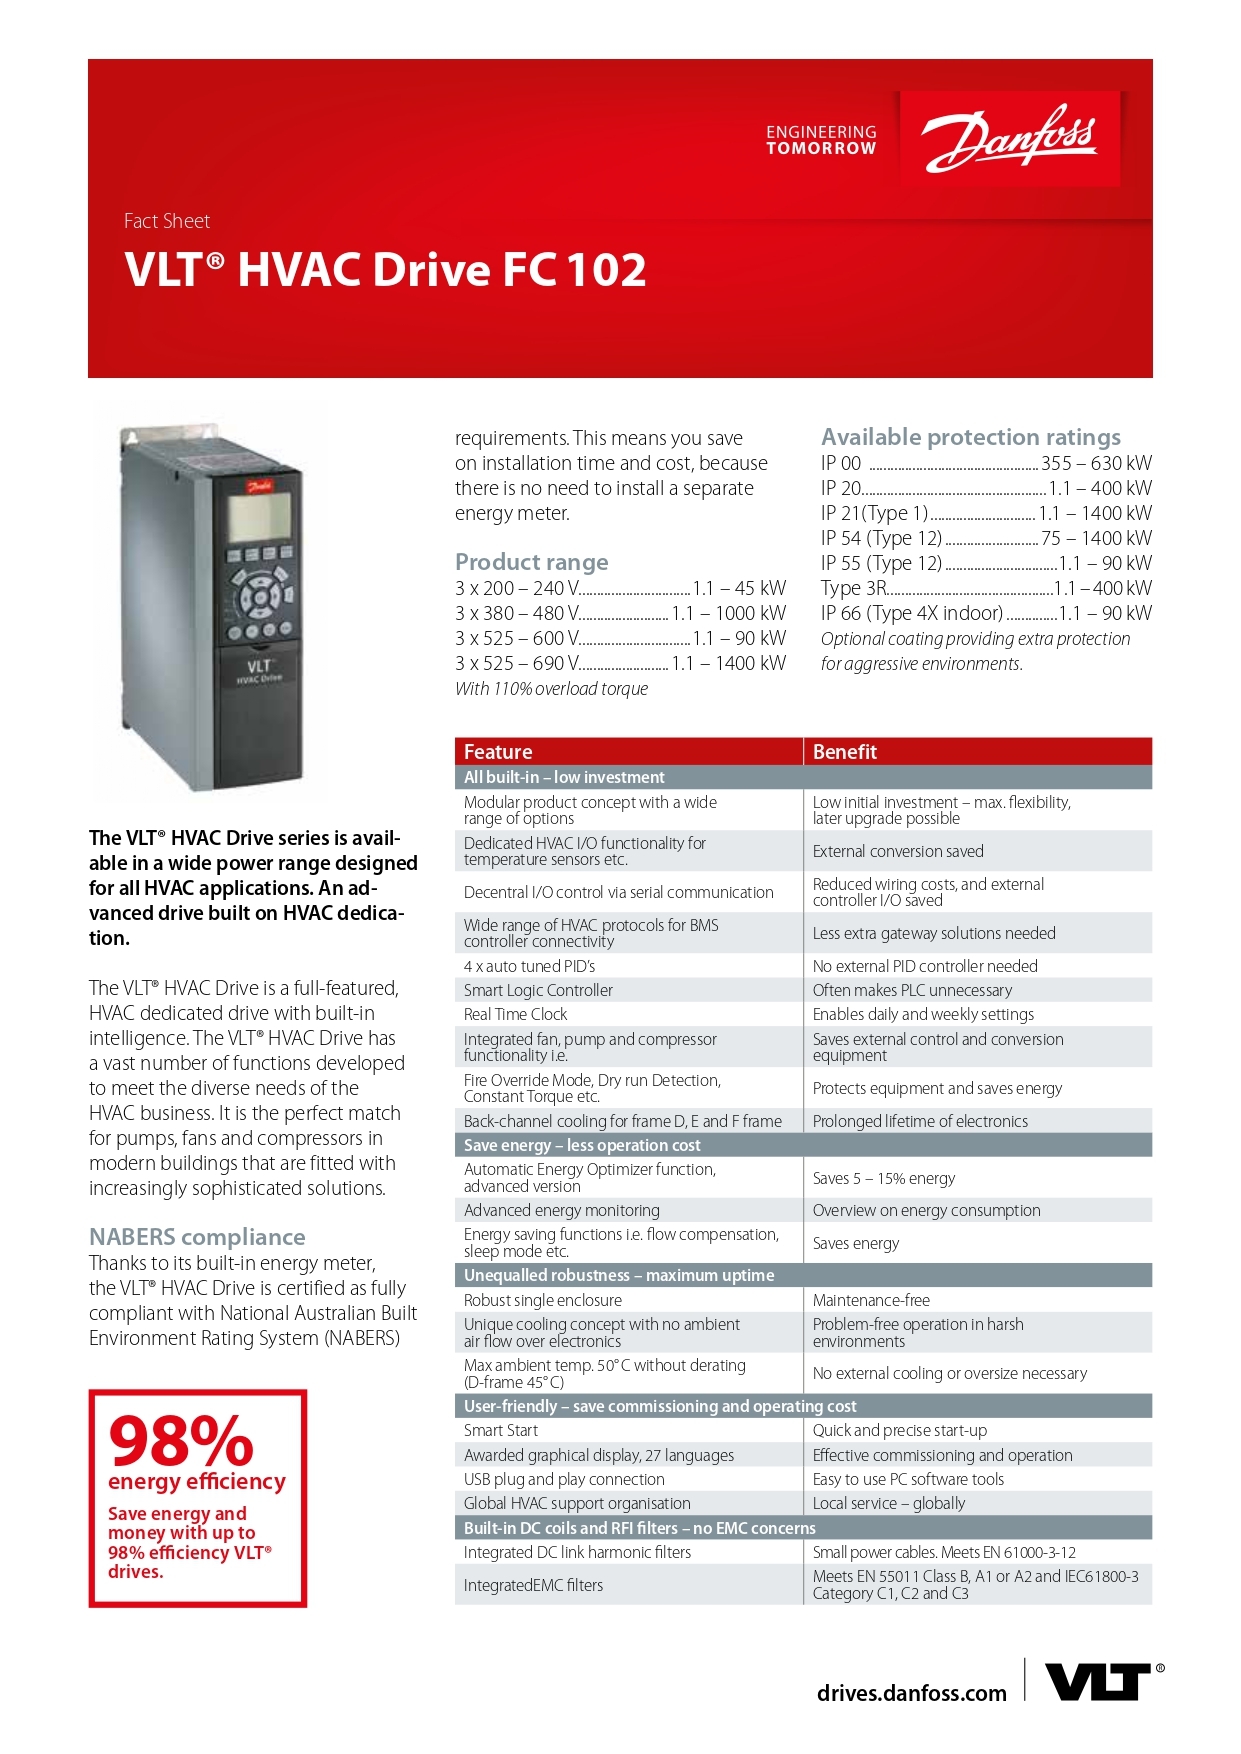 Danfoss FC 102 VLT HVAC Drive